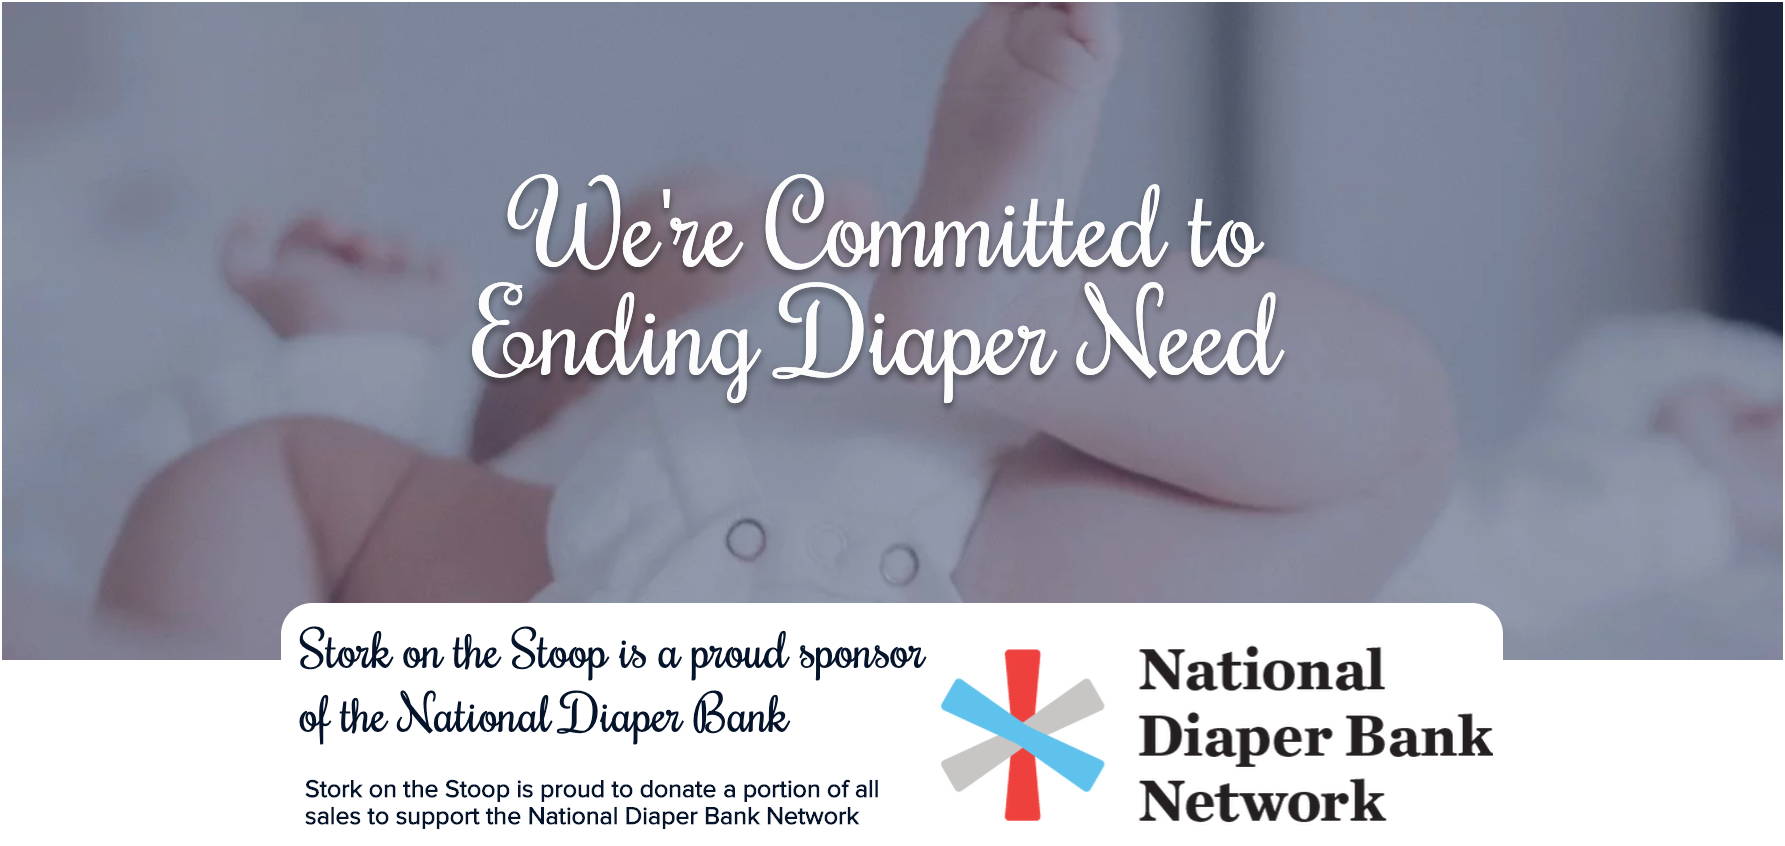 National Diaper Bank